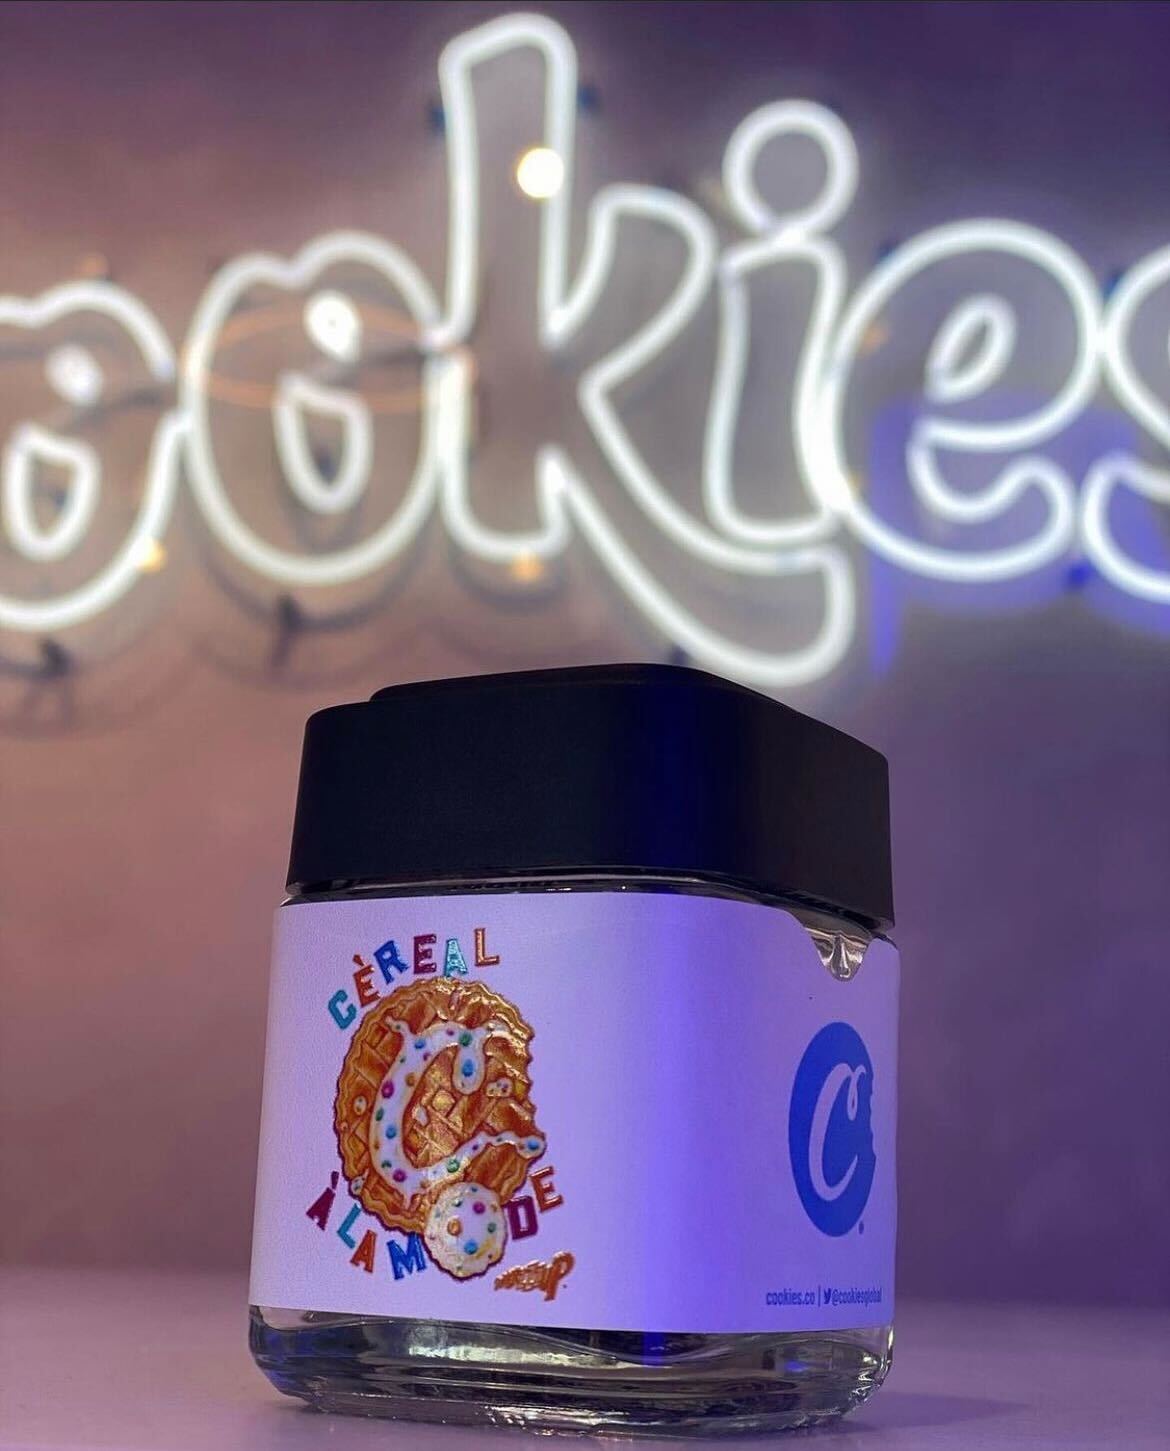 Calyx jar with custom Cookies branding in front of neon Cookies sign in the background